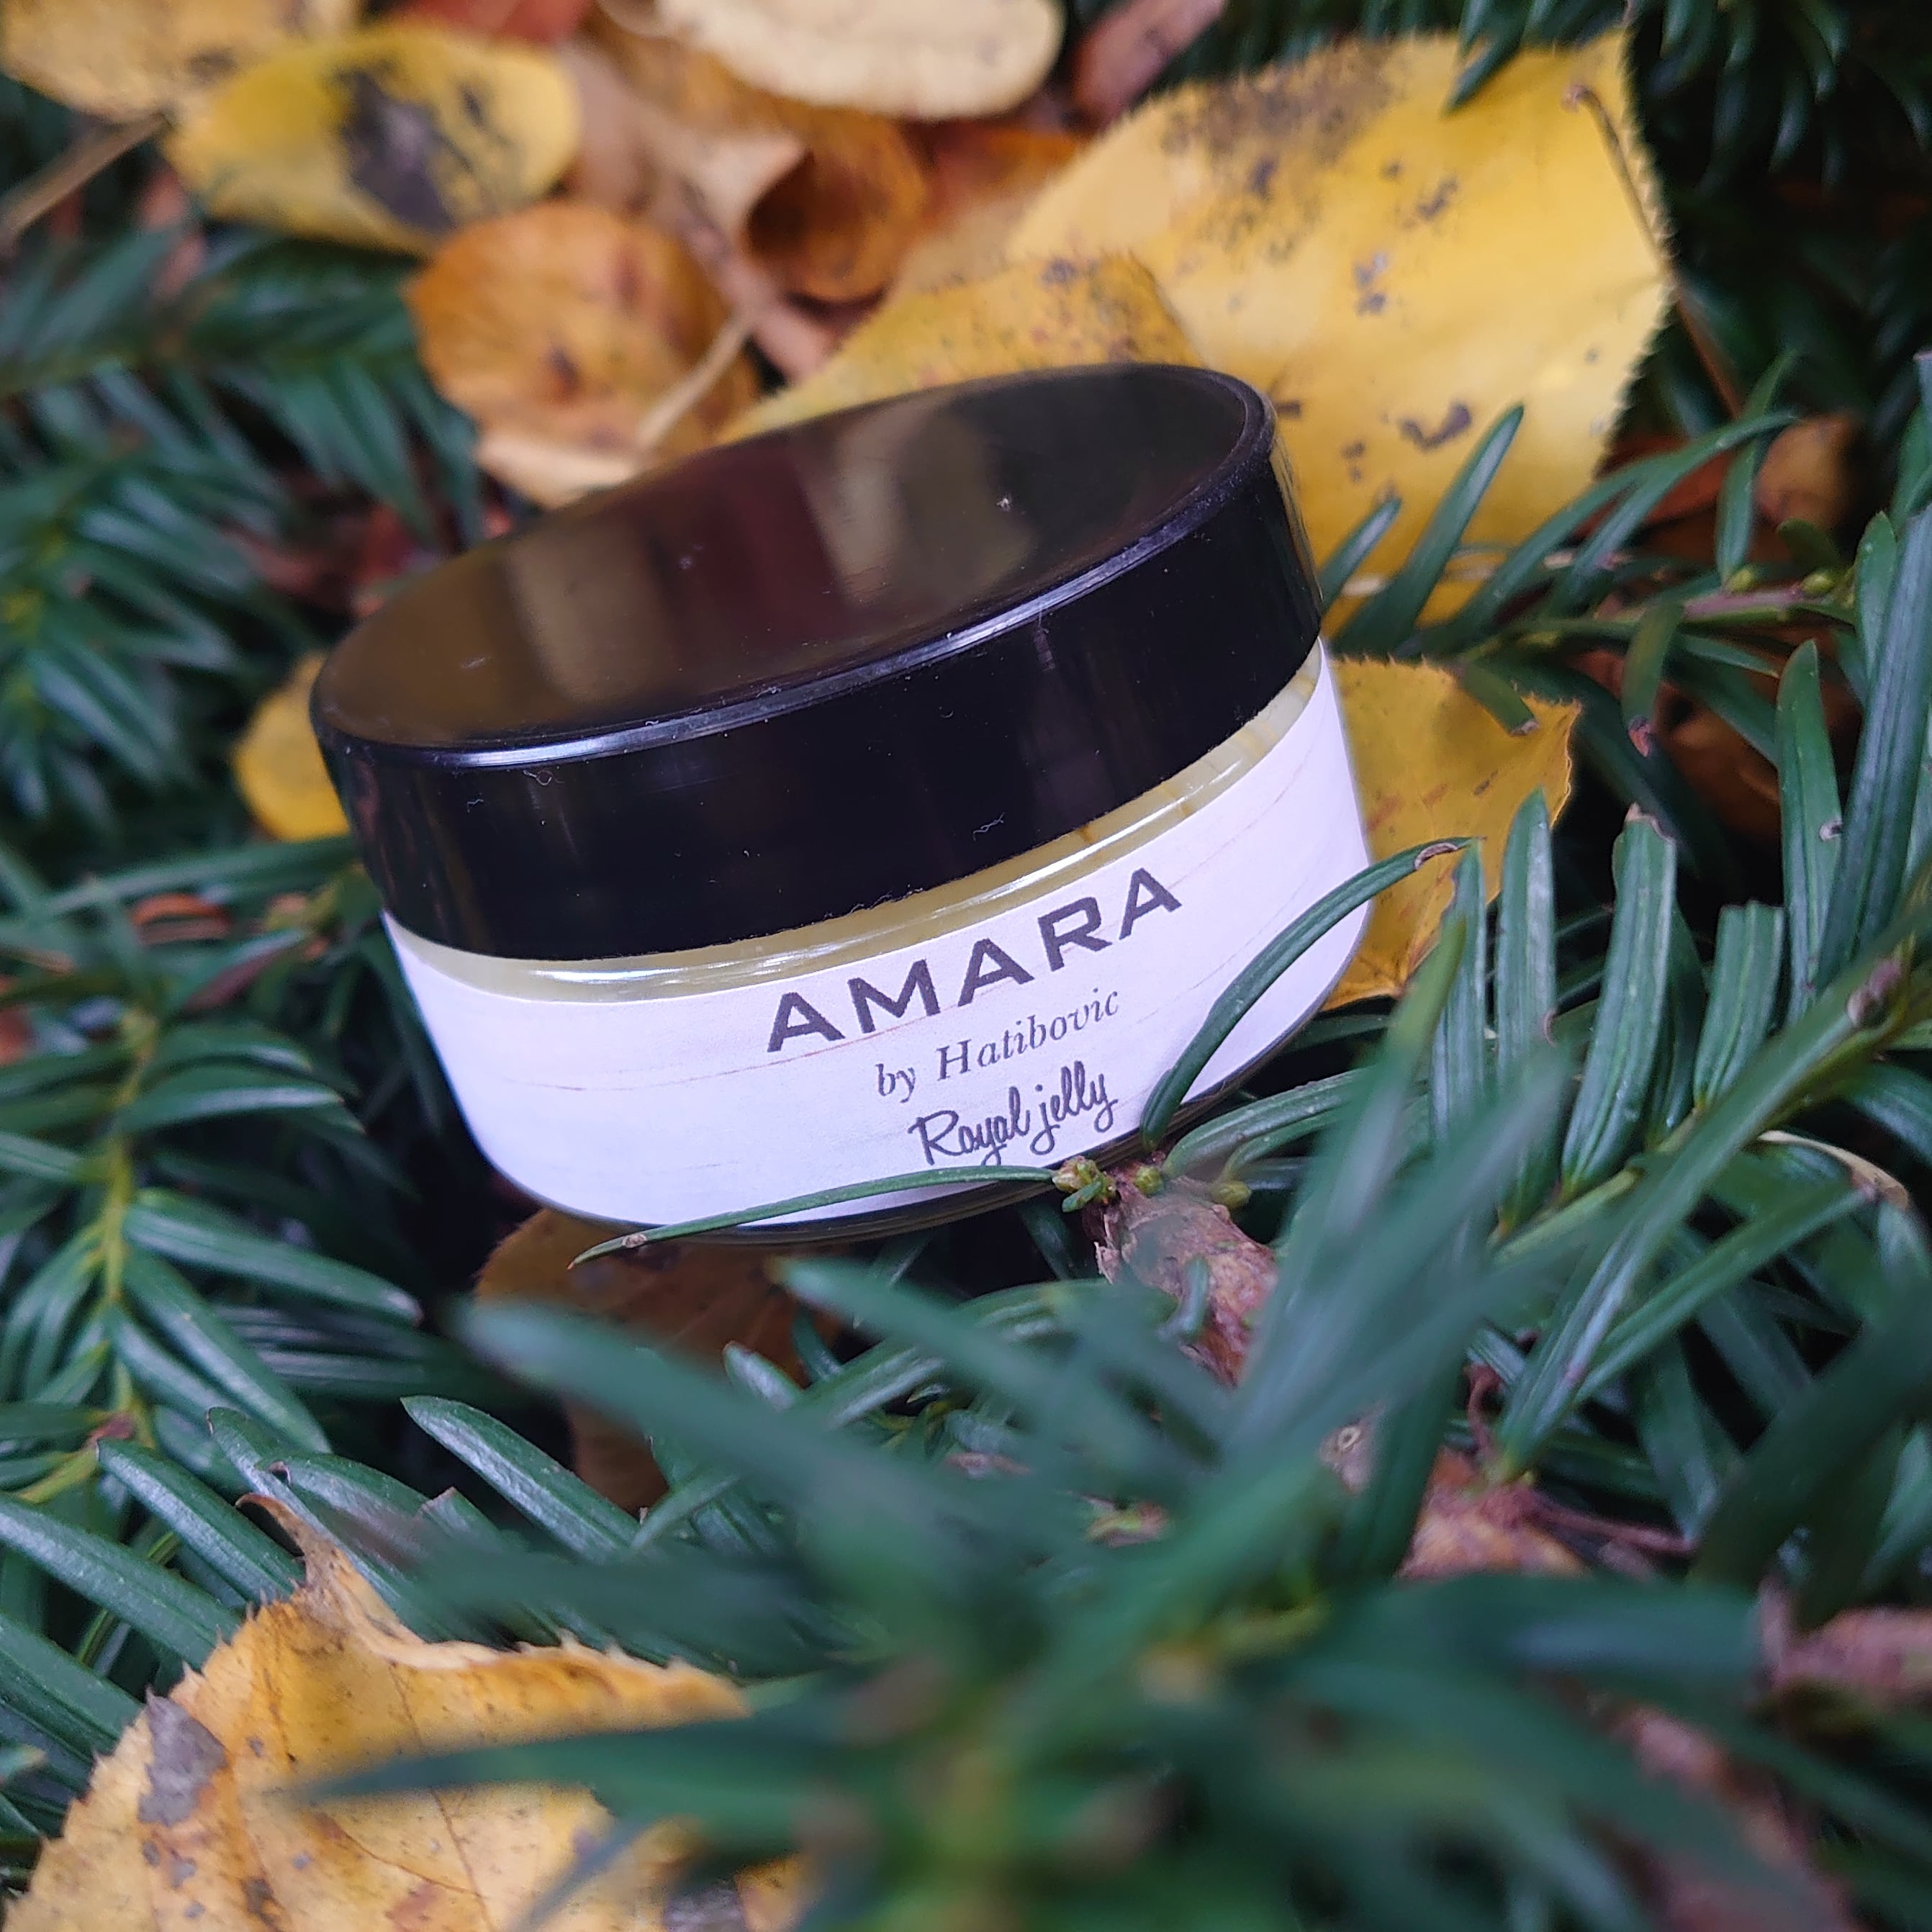 Amara by Hatibovic Cosmetics